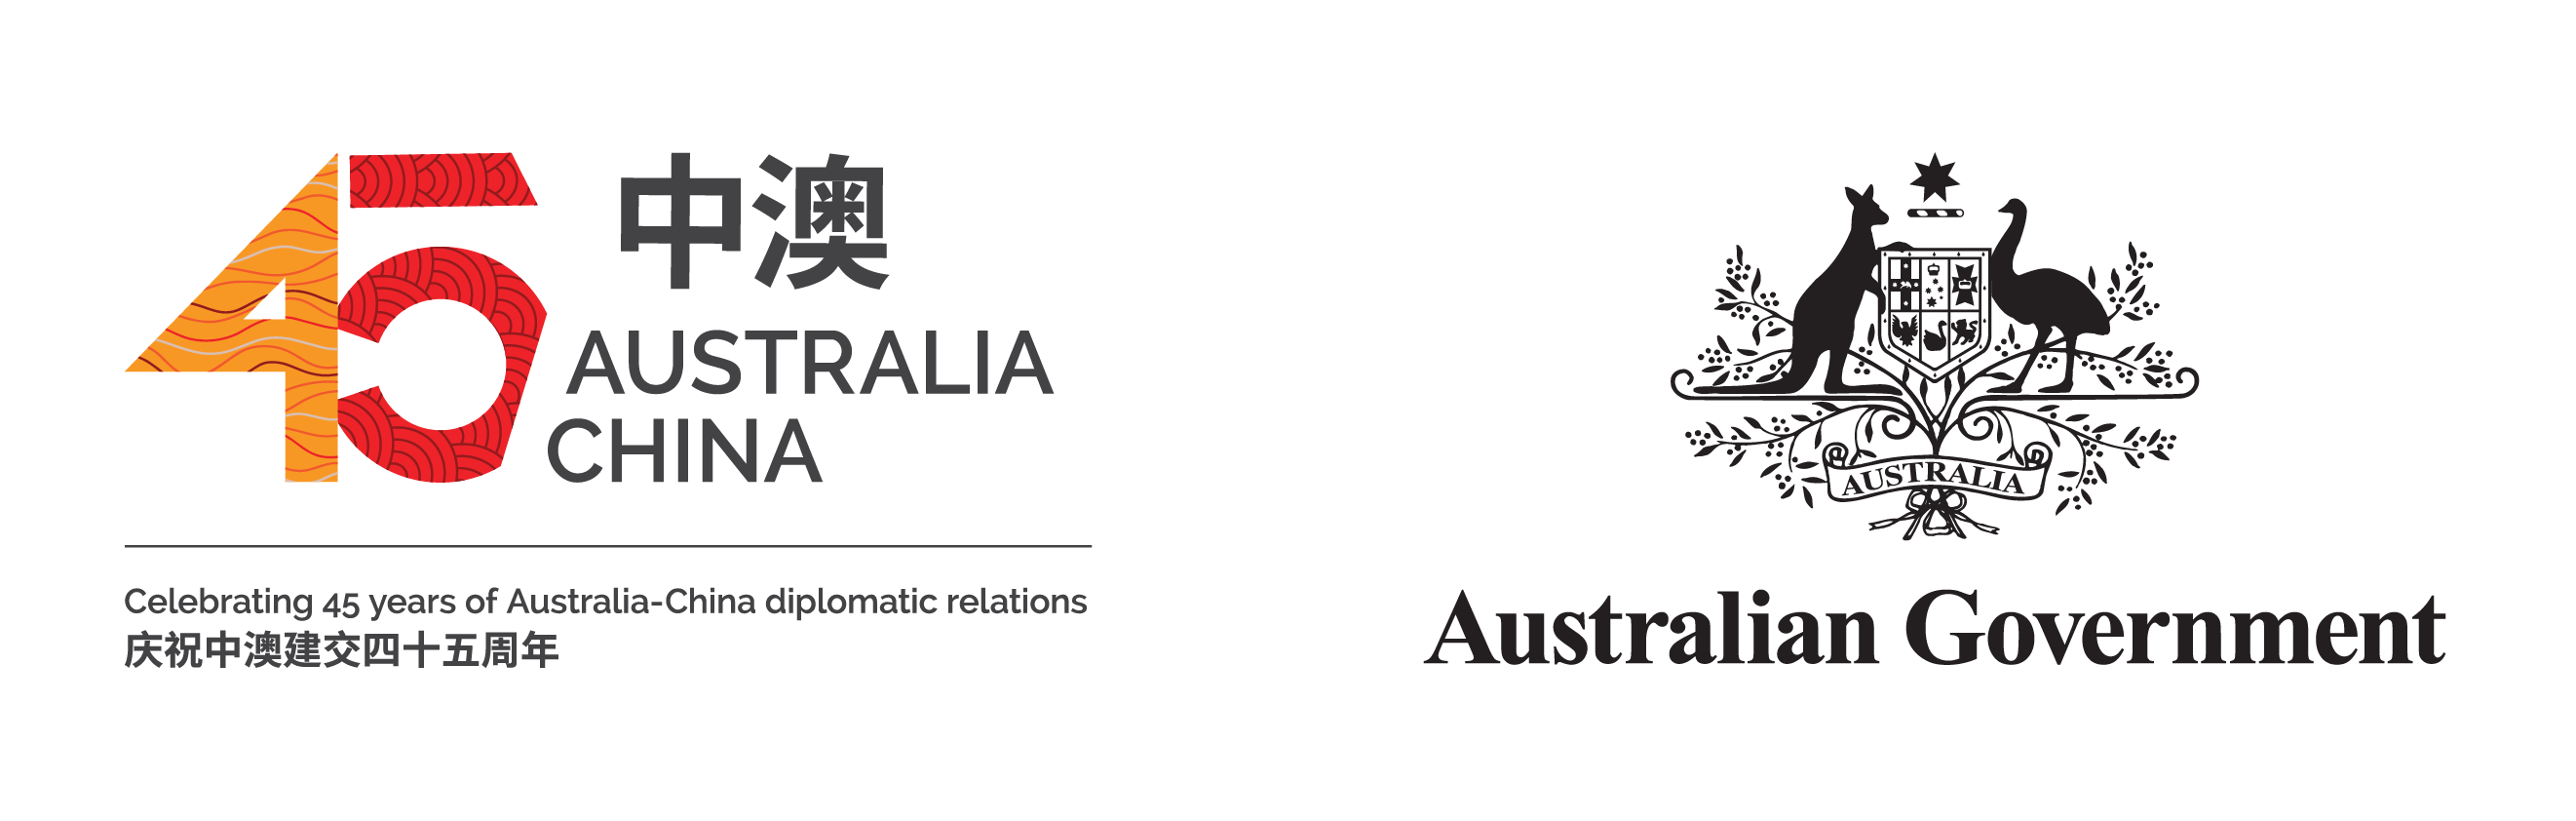 Dfat Logo - Stories. Celebrating 45 Years Of Australia China Diplomatic